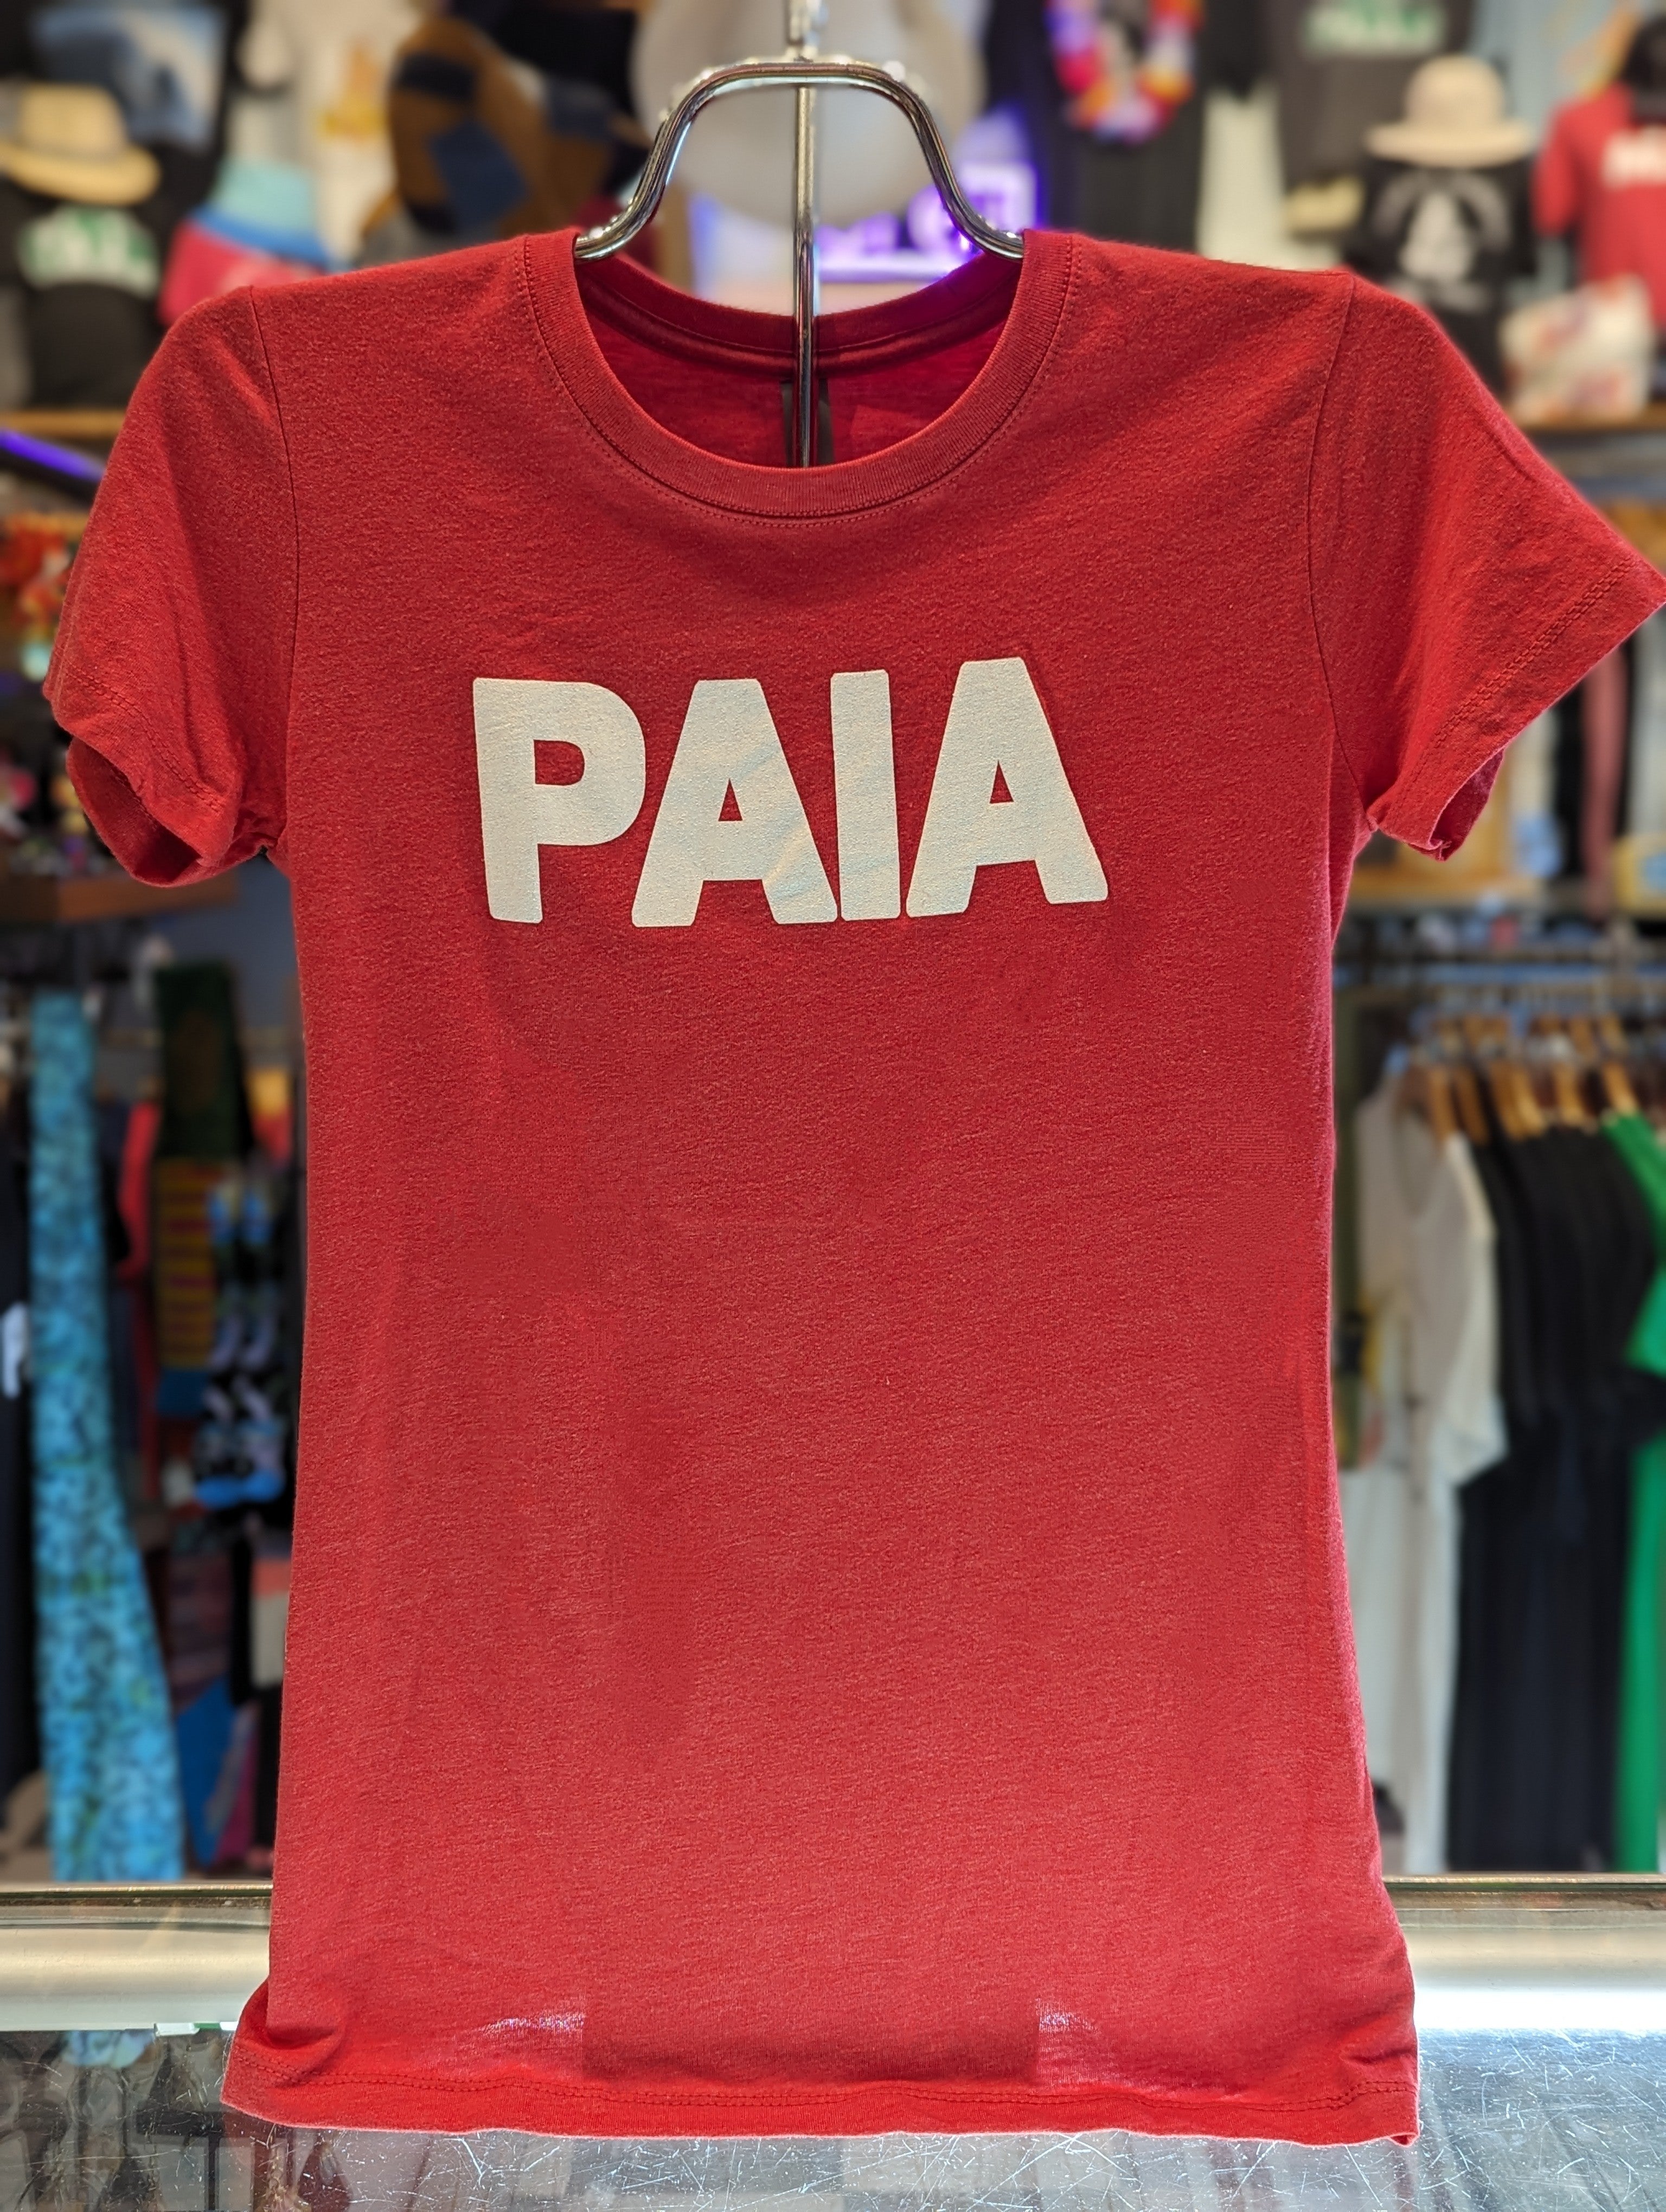 Women's Red "Paia" Tee